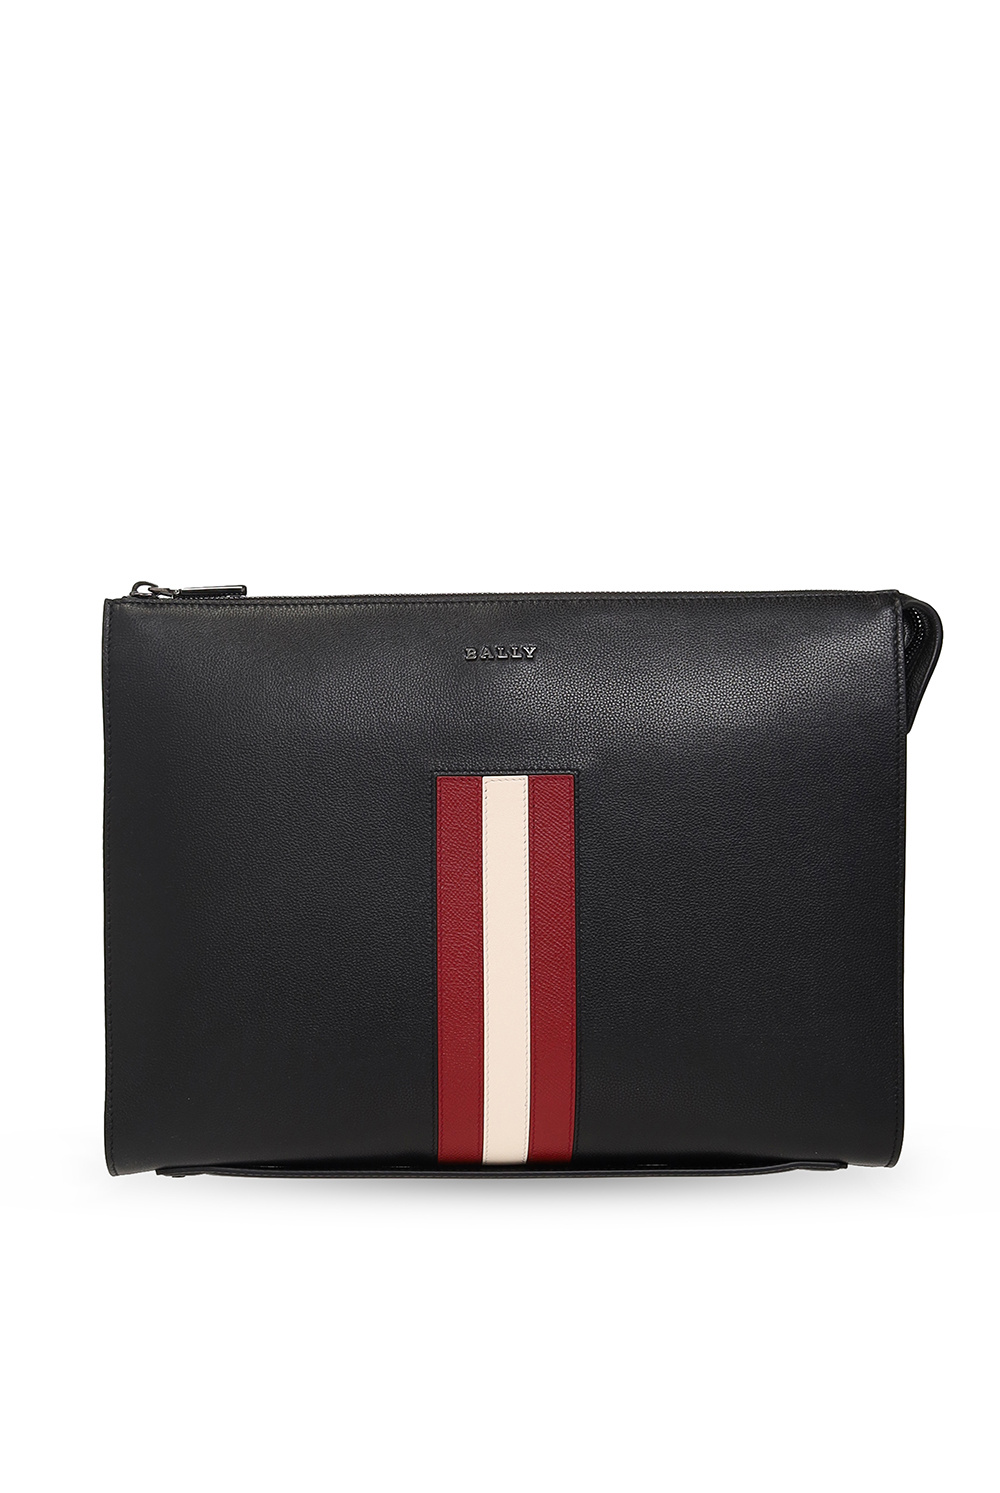 Black ‘Enzon’ briefcase Bally - Vitkac GB